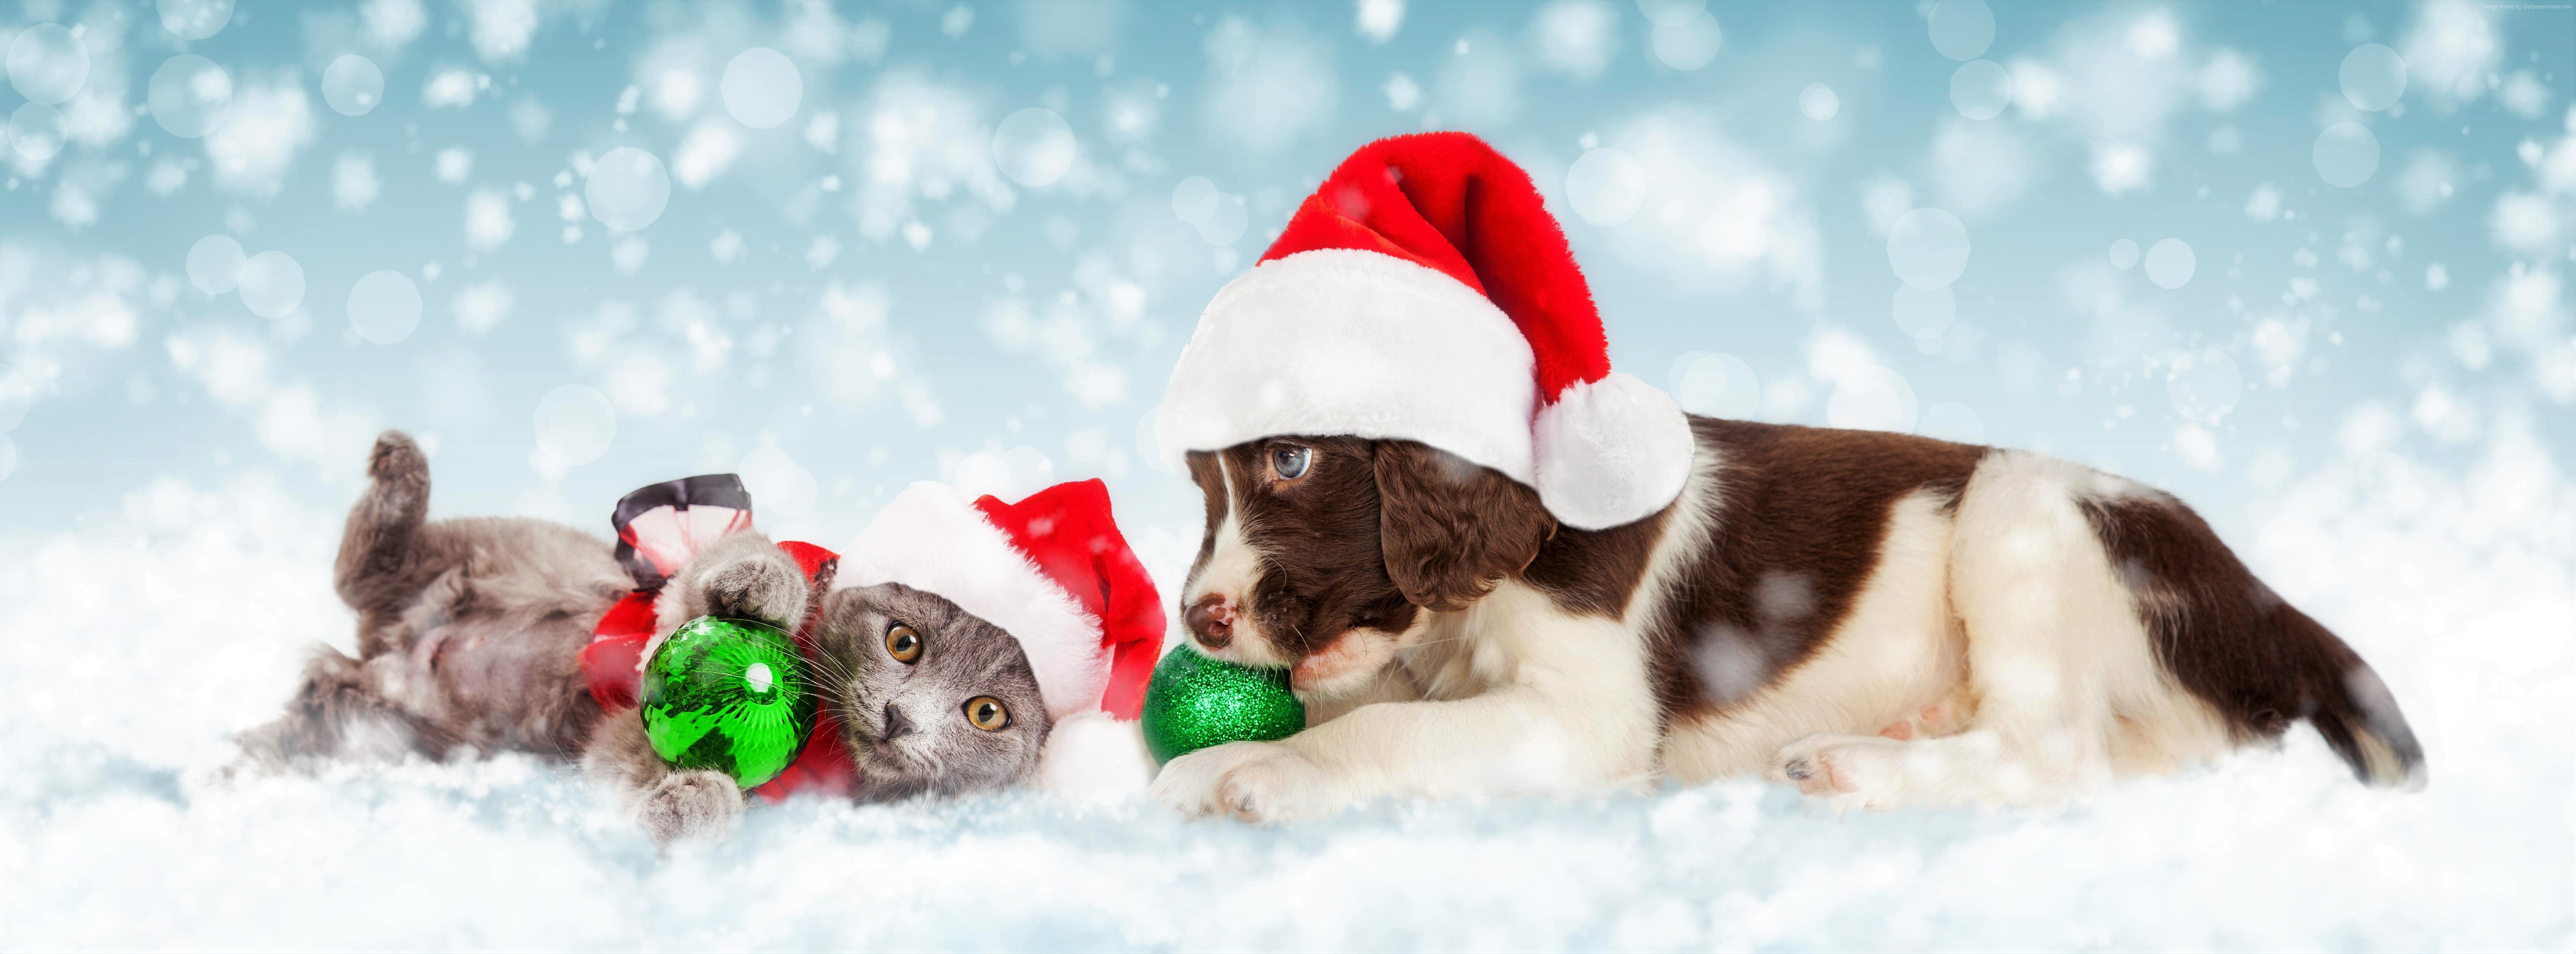 Christmas Cat Dog Kitten Puppy Santa Hat Christmas Ornaments Snow ...